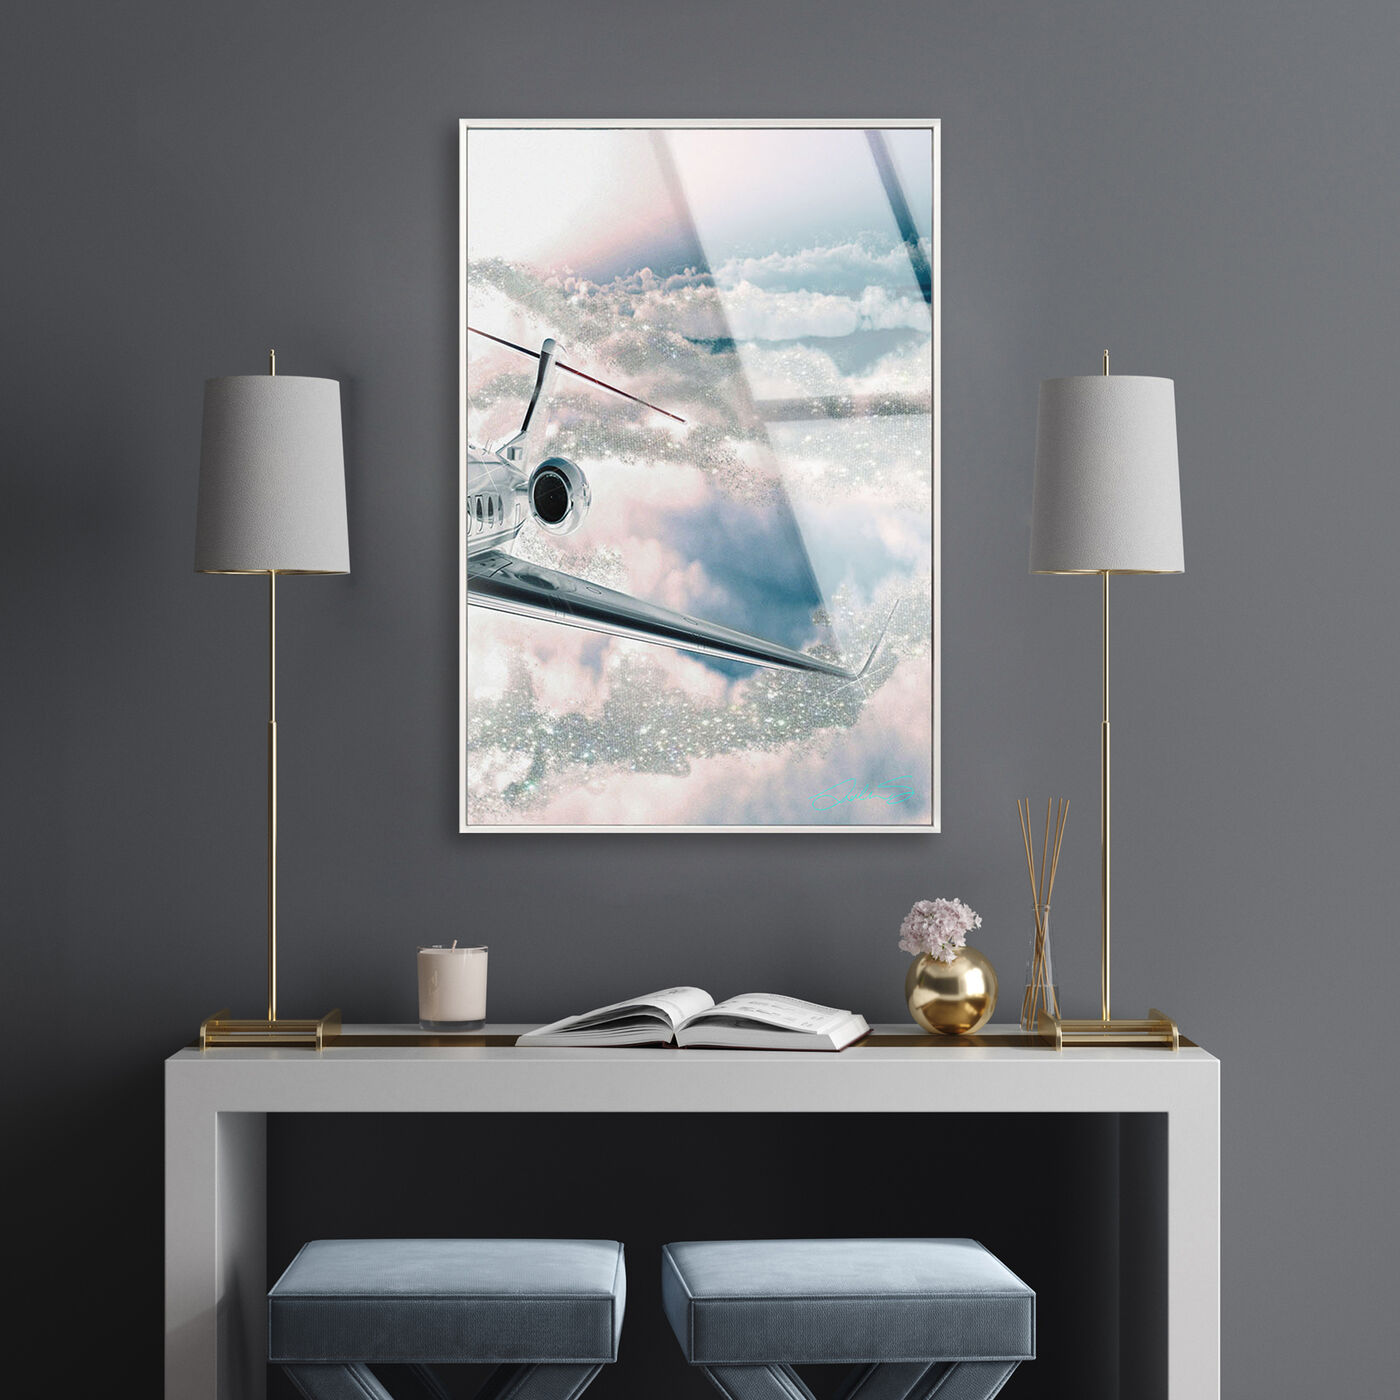 Taking the Jet Up - Framed Acrylic Art